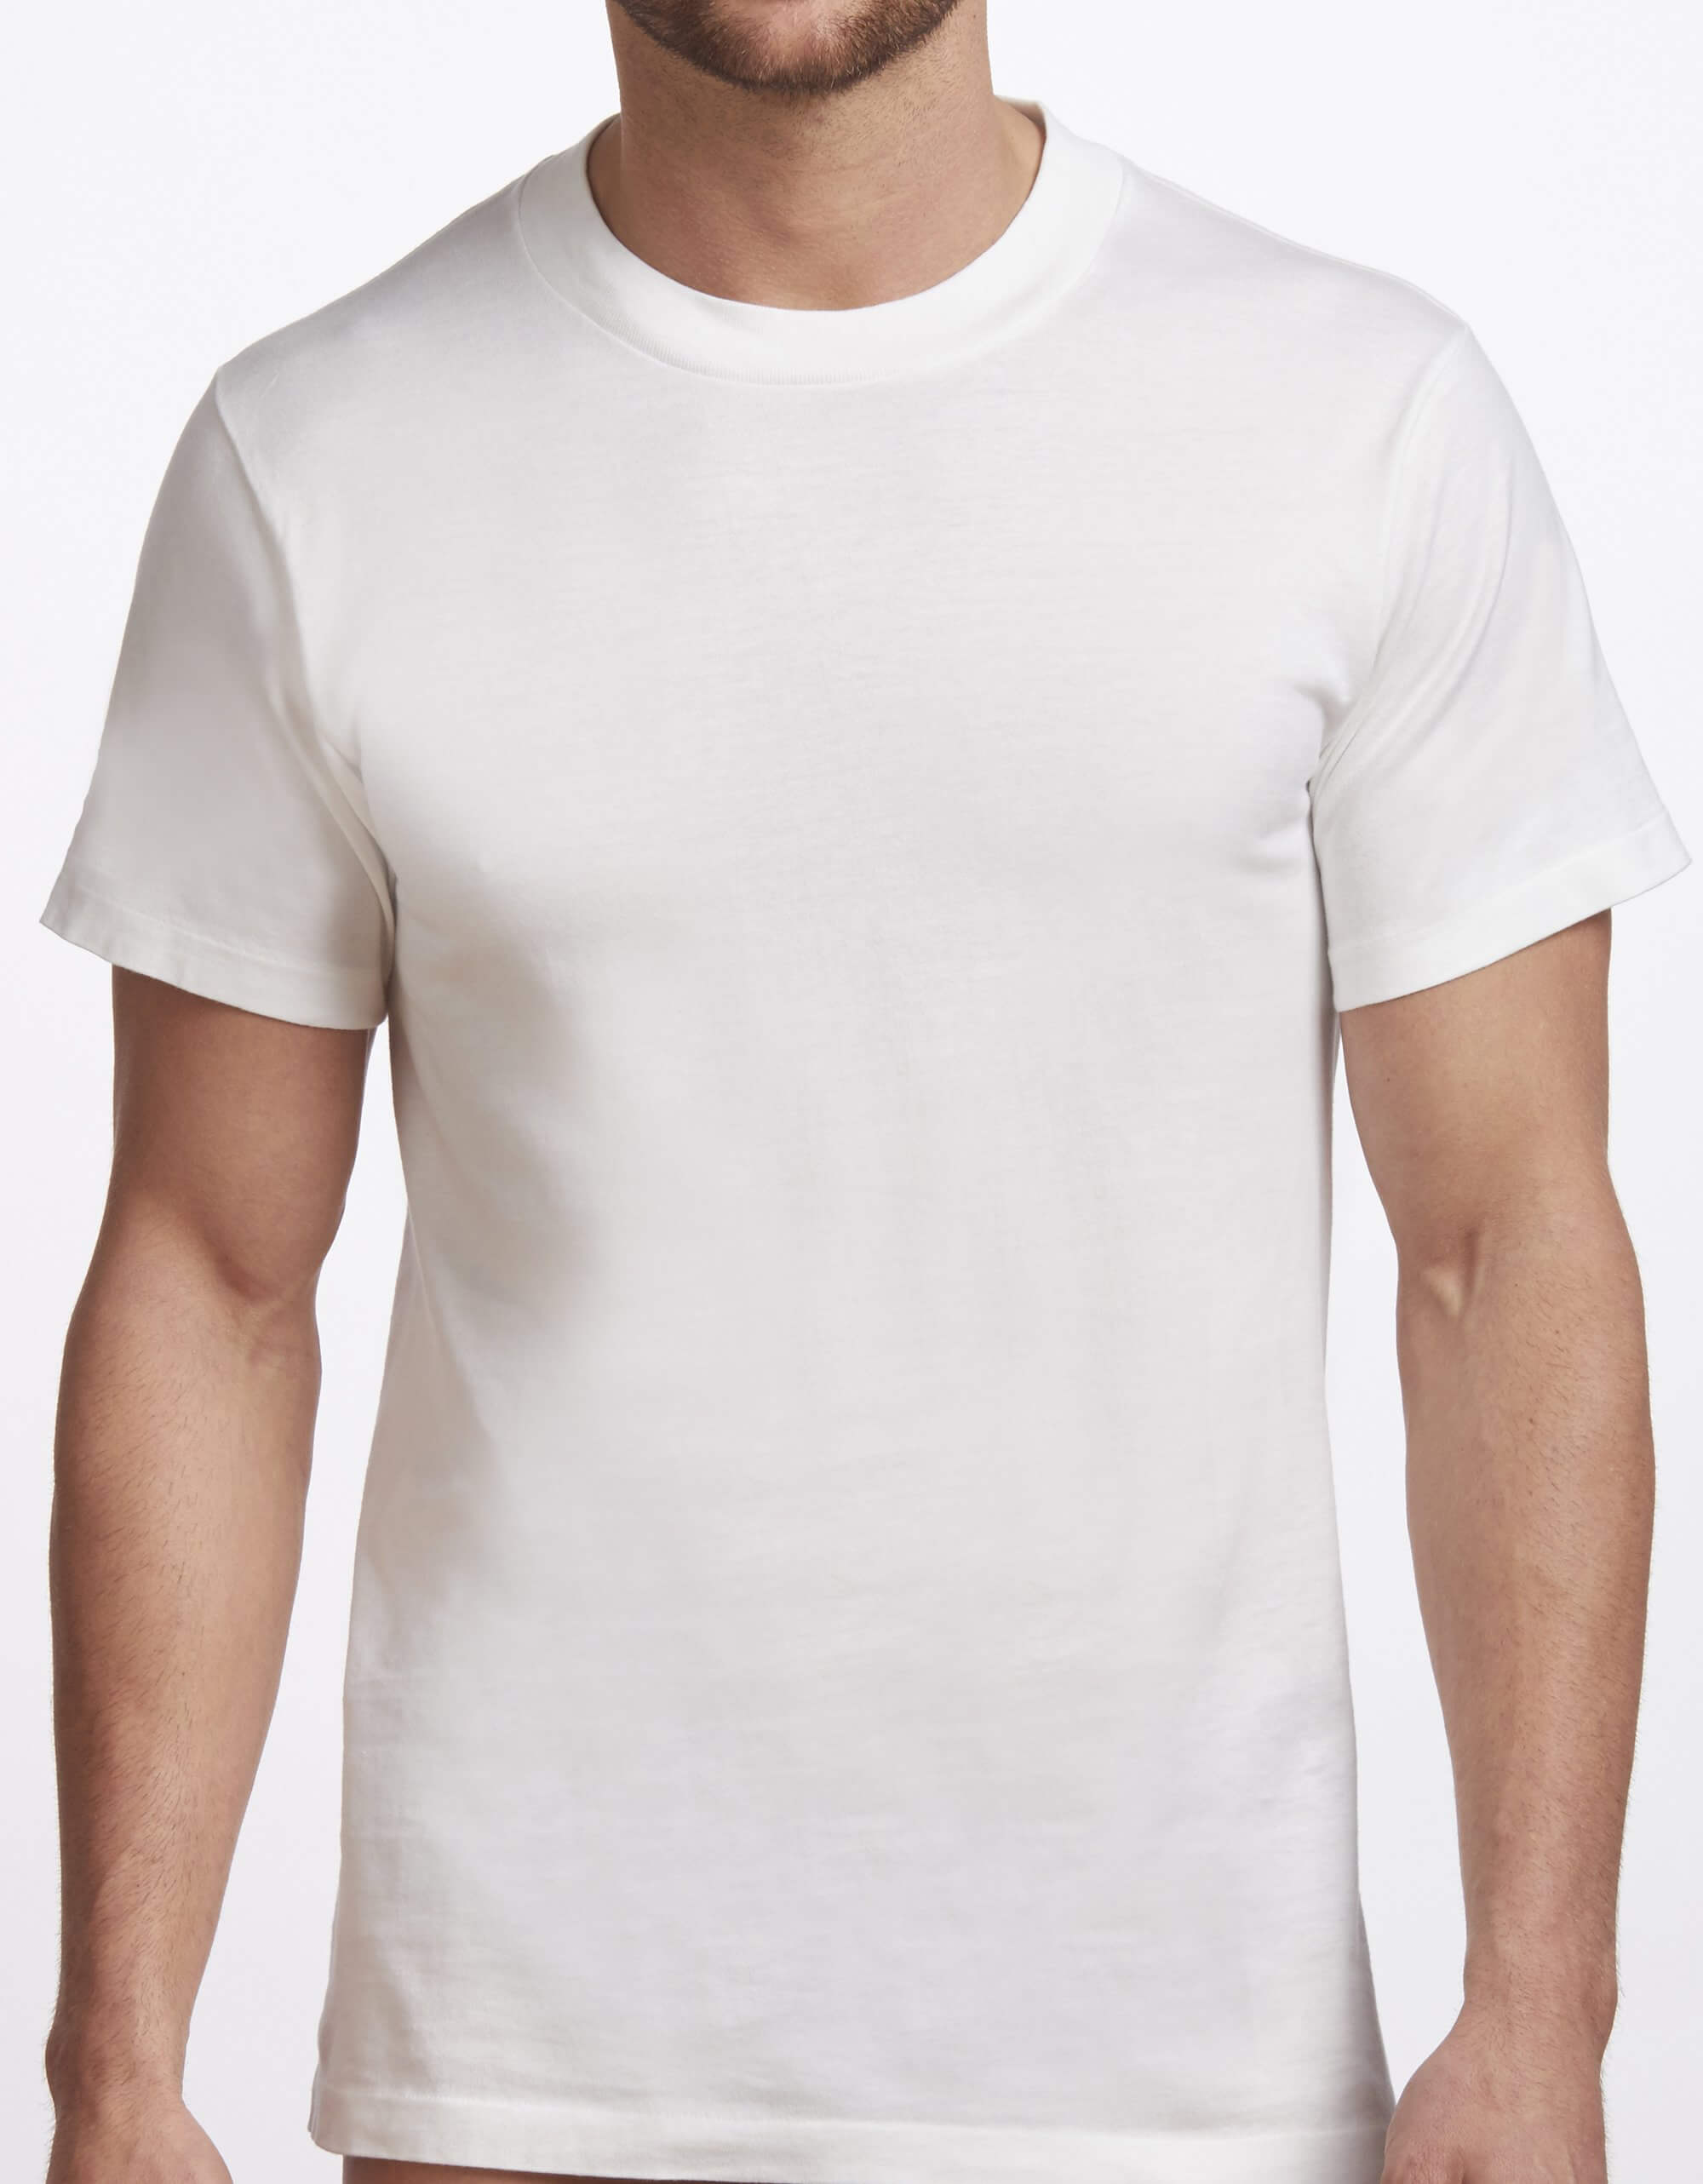 Men's Premium Crew Neck T-Shirt - White 2 Pack